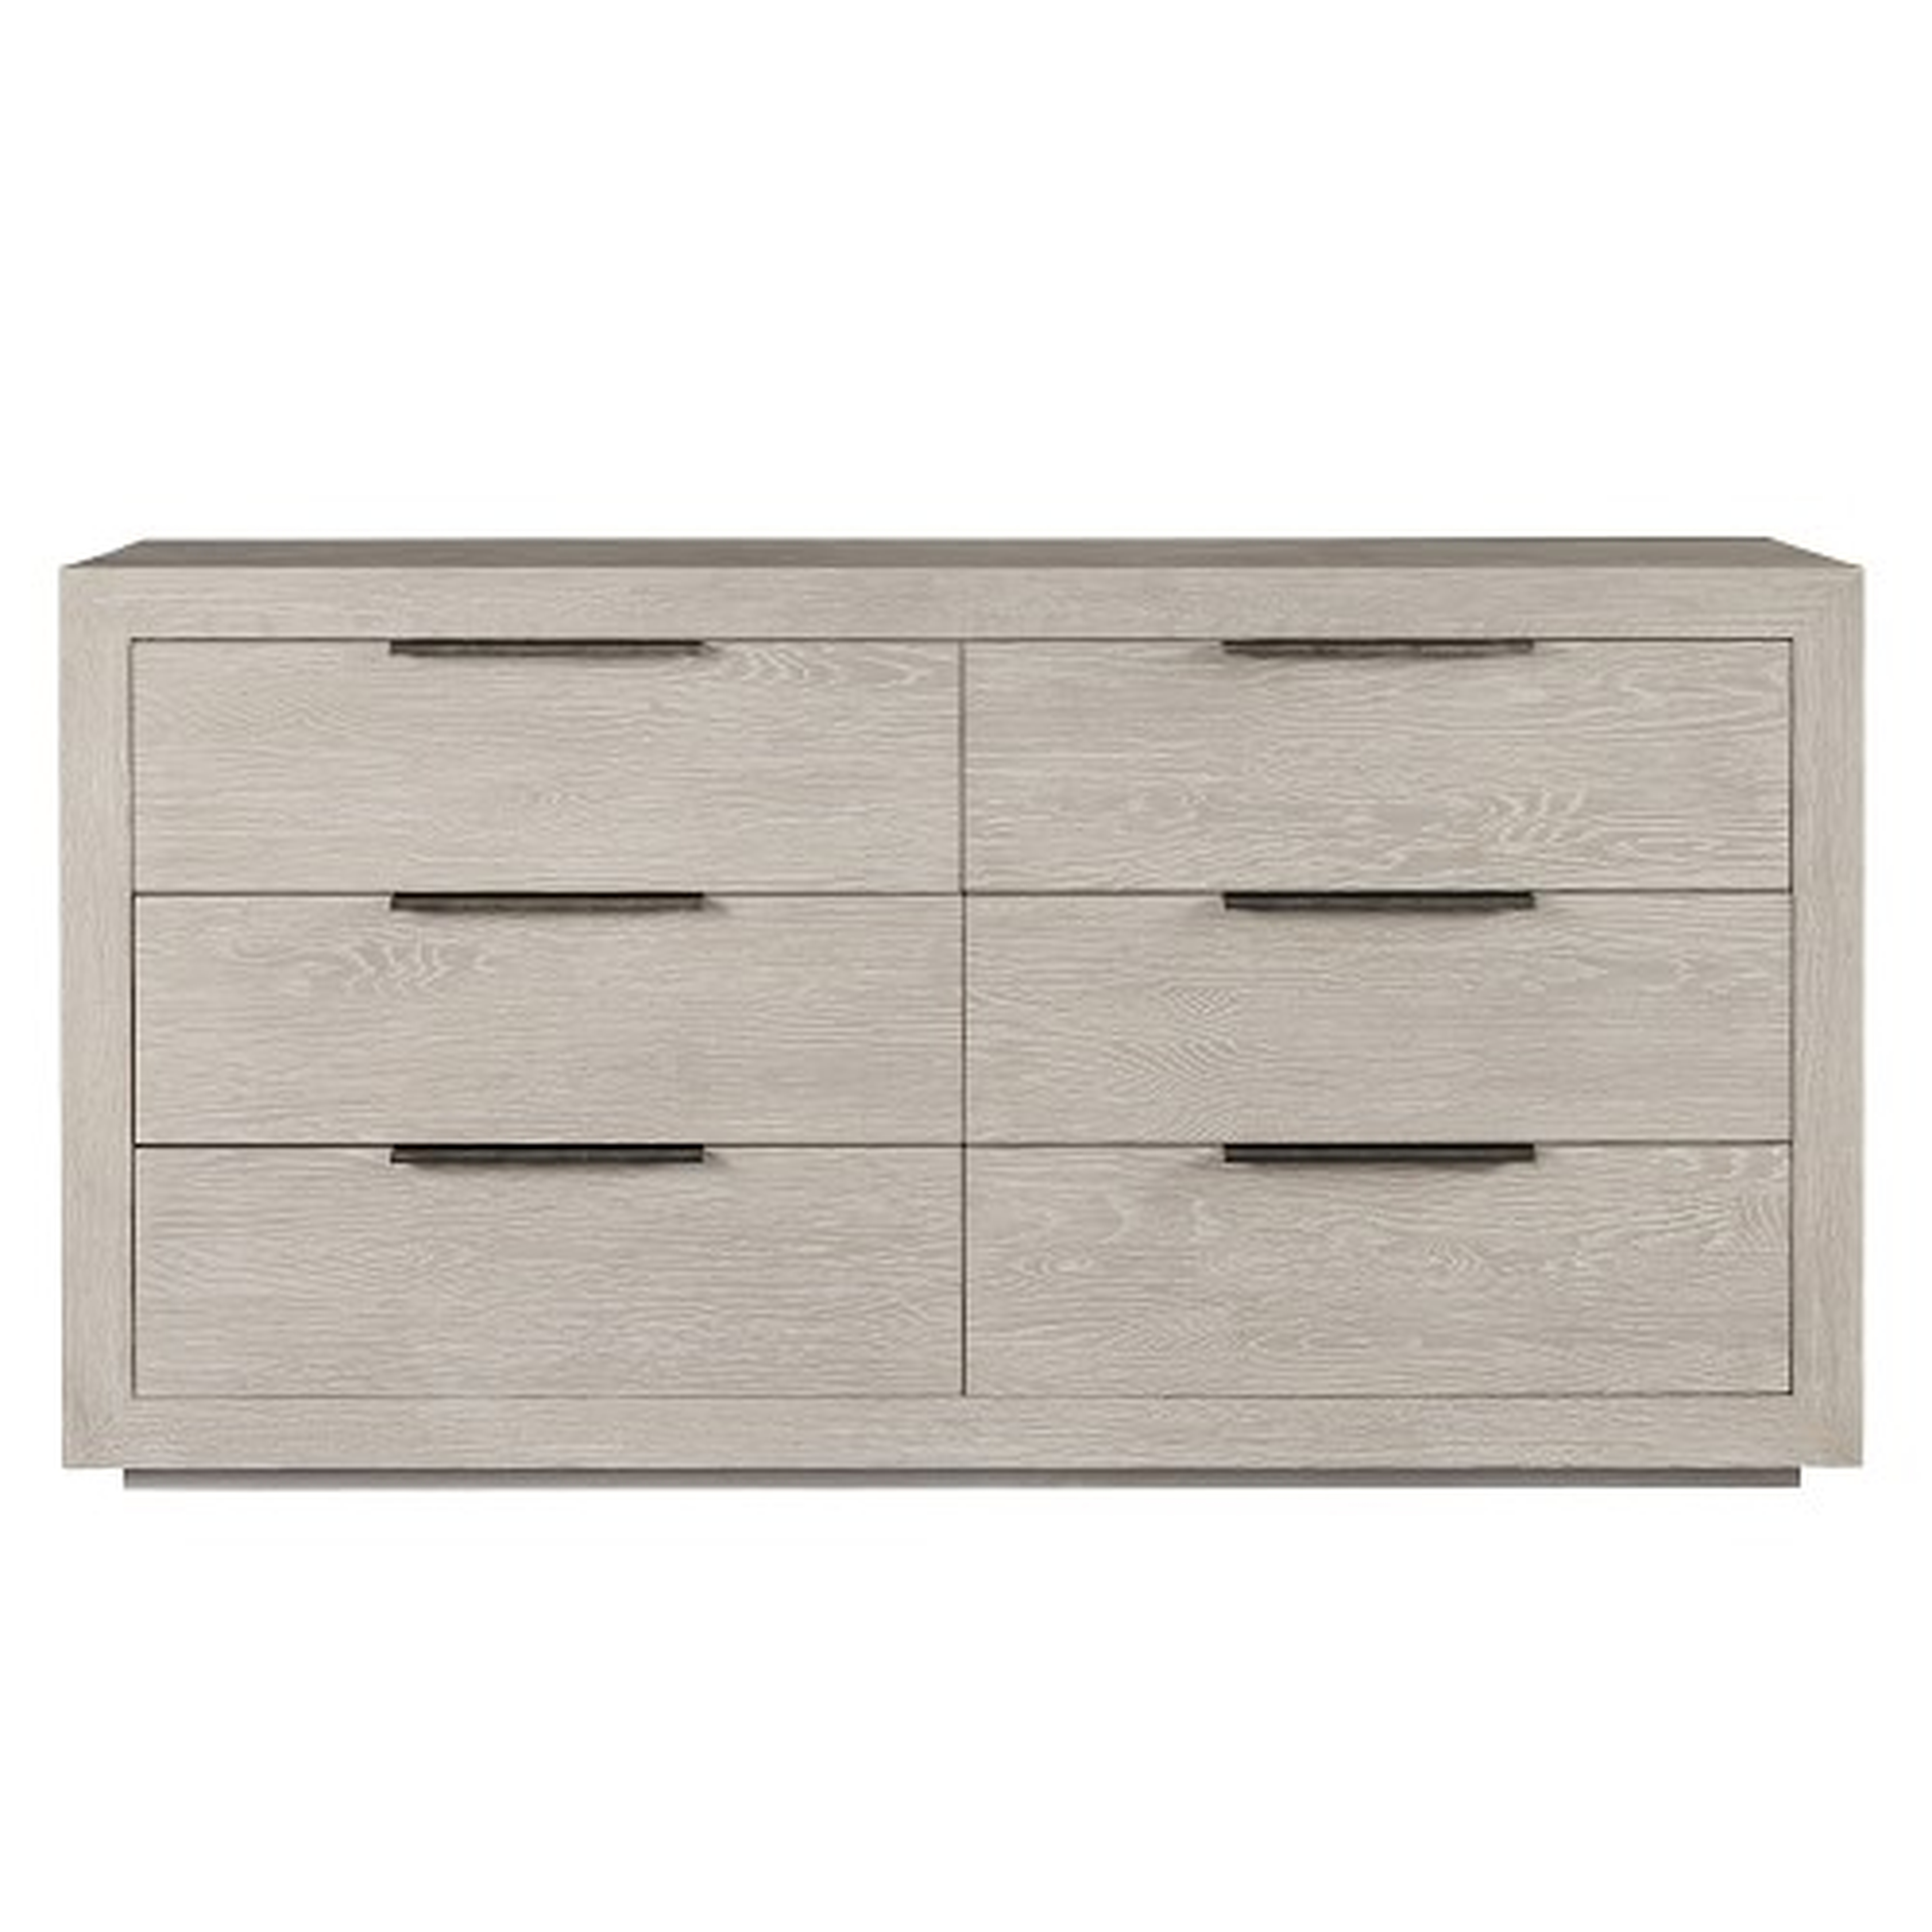 Eldorado 6 Drawer Dresser, Oak, Quartz, Bronze - Williams Sonoma